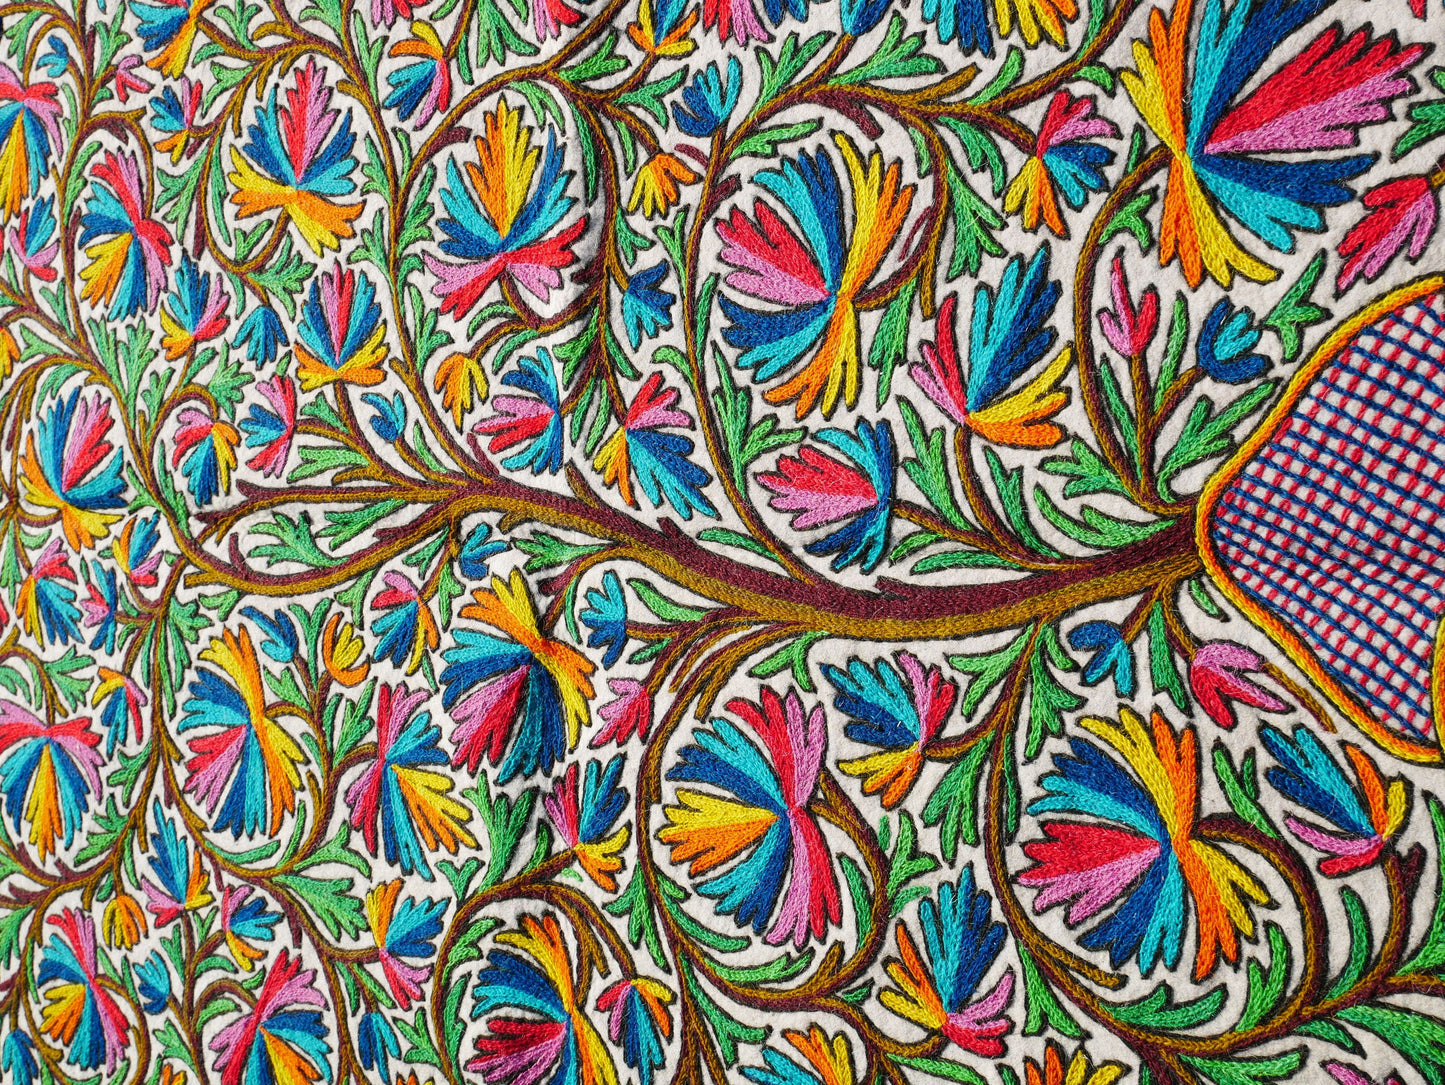 Handmade wool rug "Tree of life" traditional Namda felt rug from Kashmir | hand felted, embroidered 6x4 bohemian rug - colorful floral rug